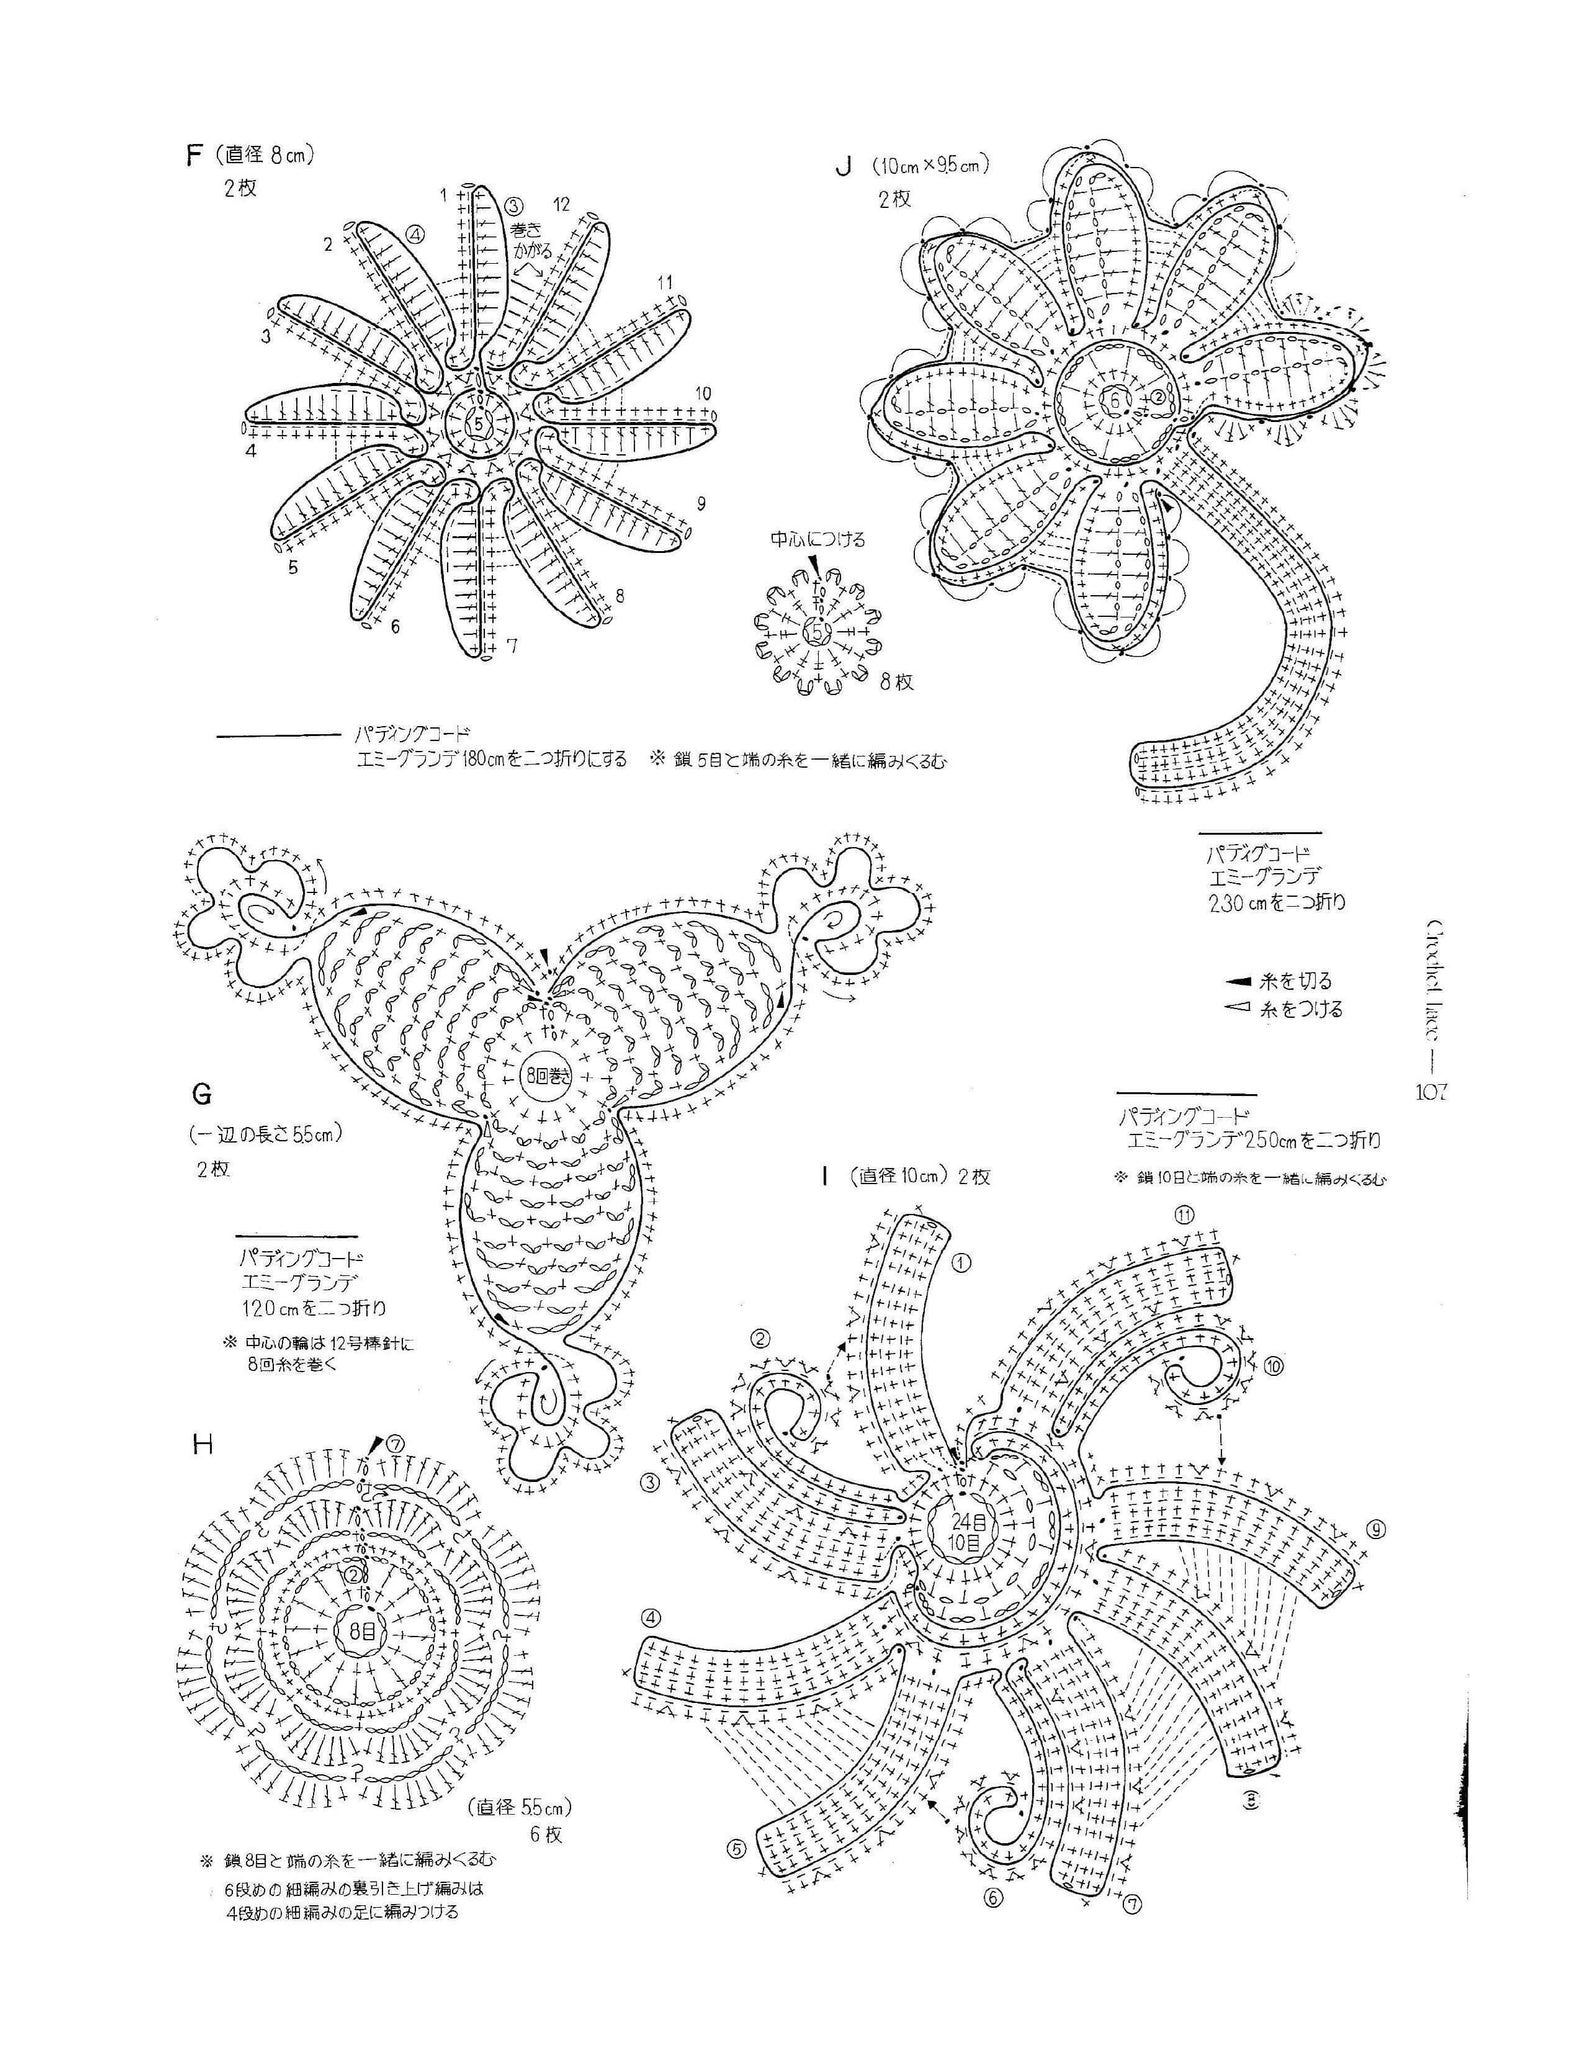 Cute white Irish lace flowers crochet market bag pattern